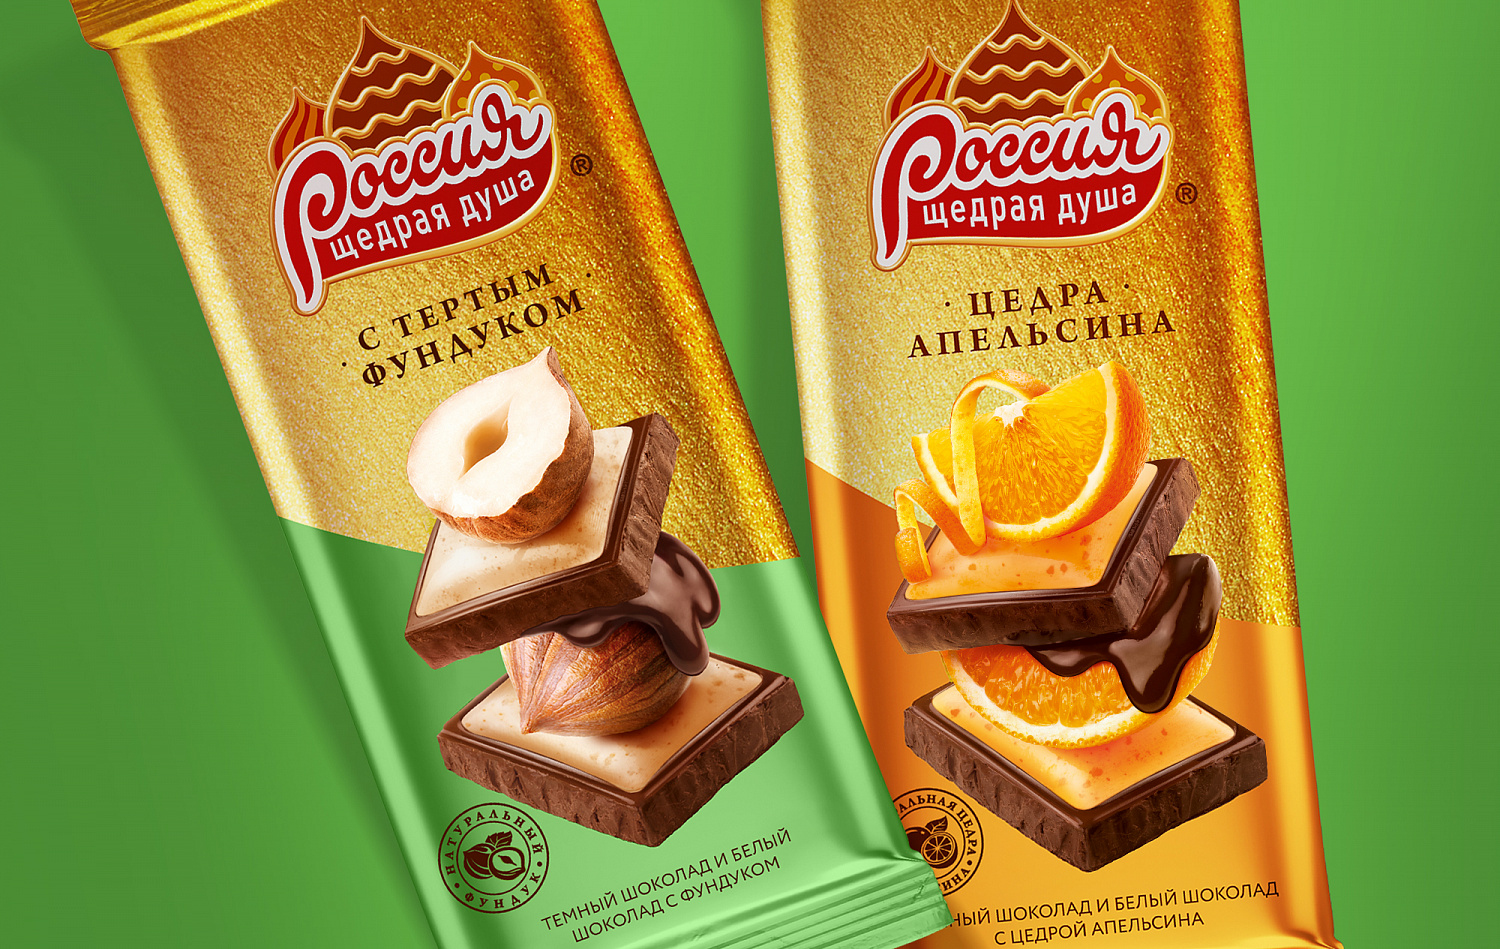 Rossiya – Schedraya Dusha with Hazelnut and Orange - Портфолио Depot